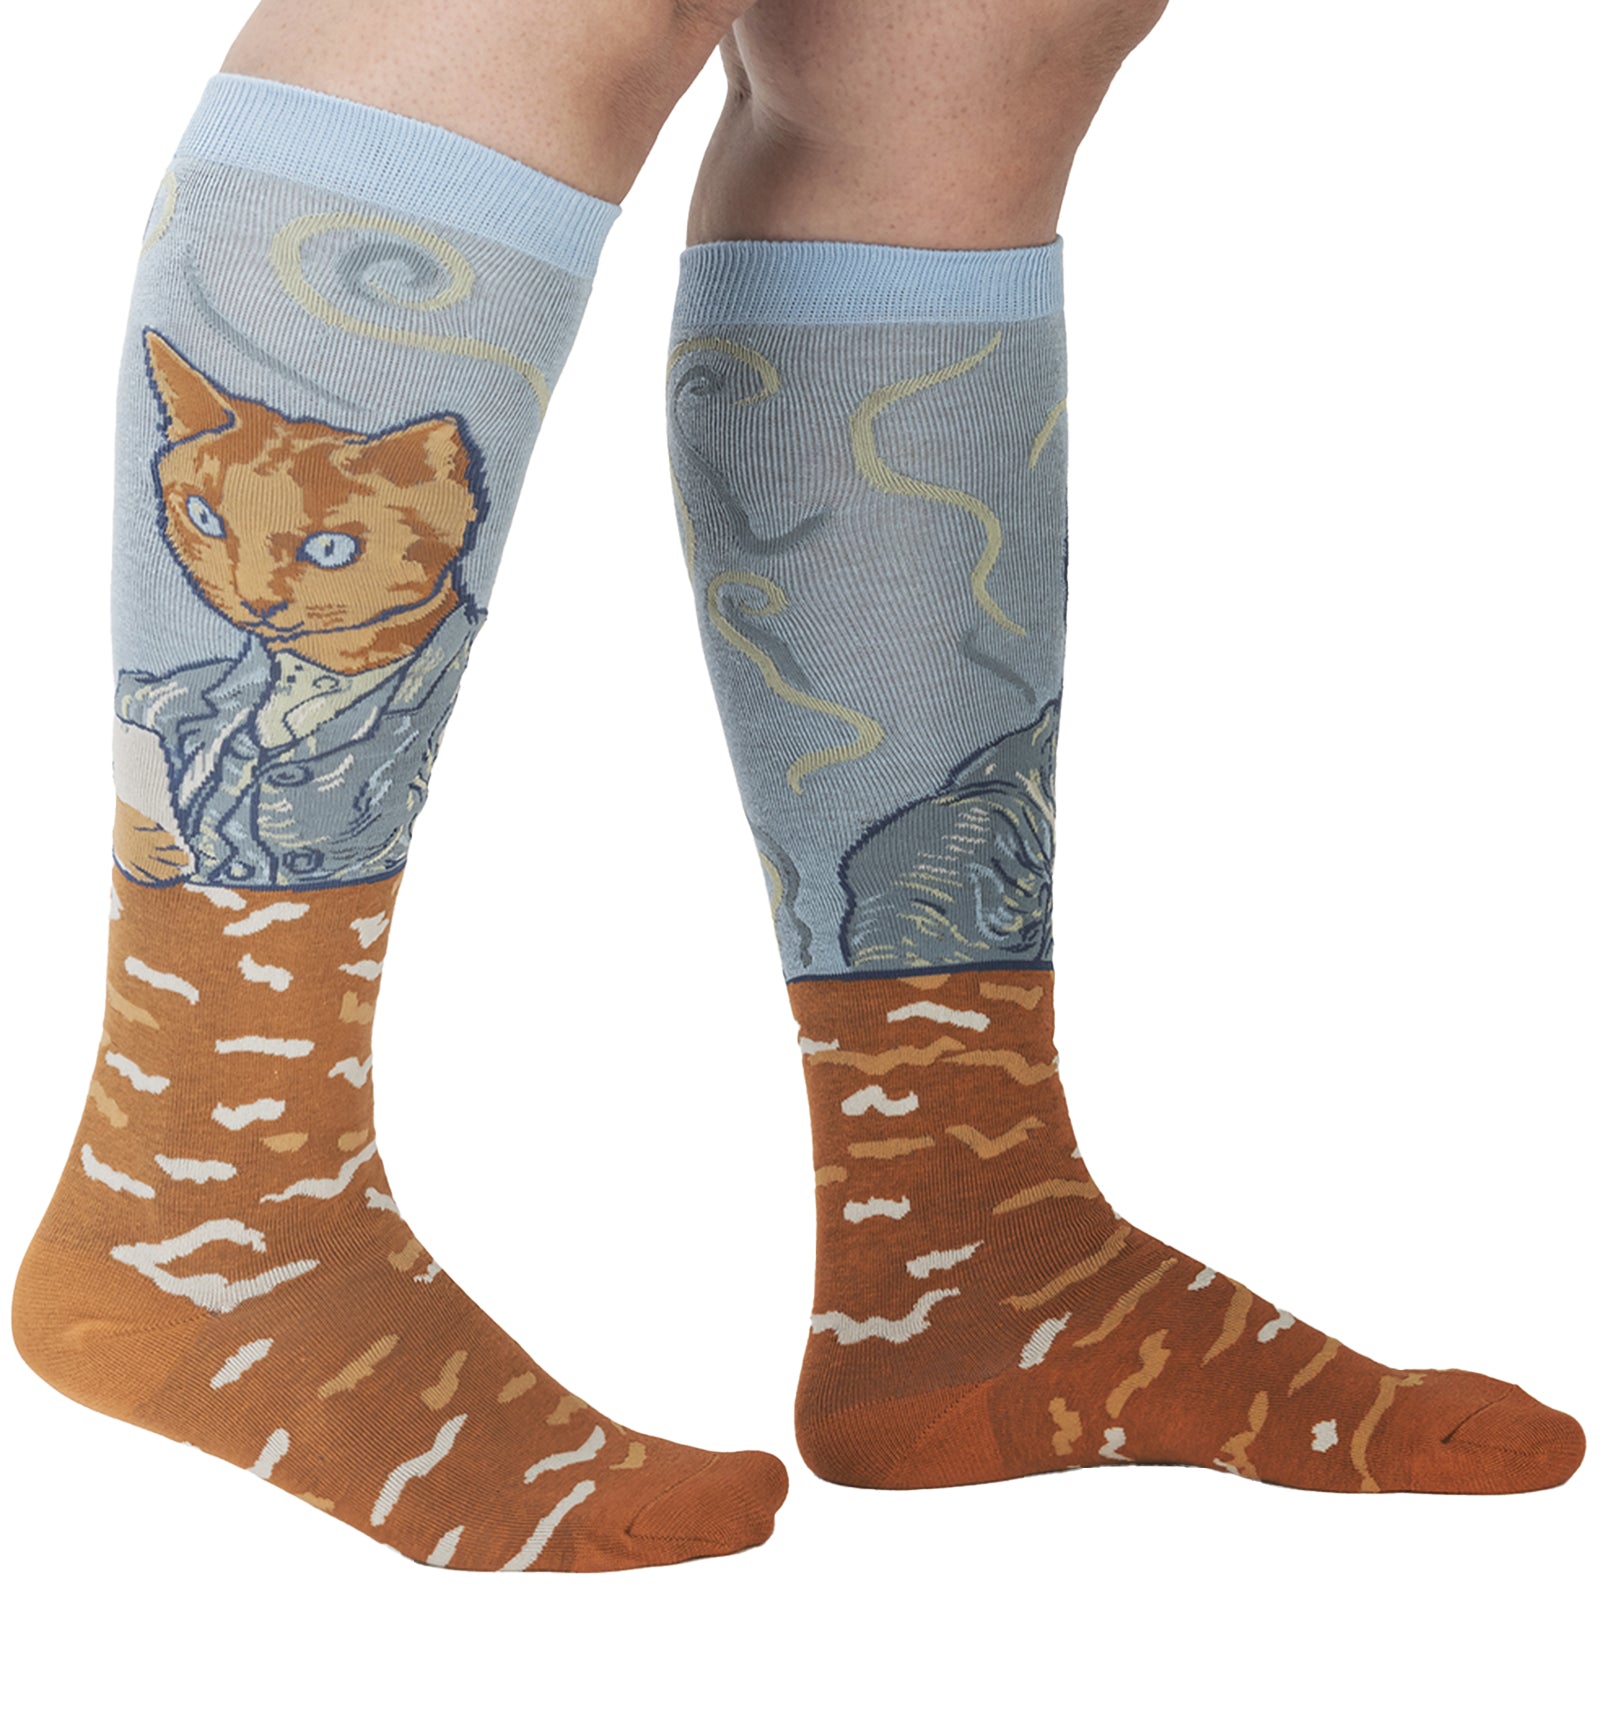 SOCK it to me Unisex Knee High Socks (F0632),Cat Van Gogh, A Selfie Portrait - Cat Van Gogh A Selfie Portrait,One Size